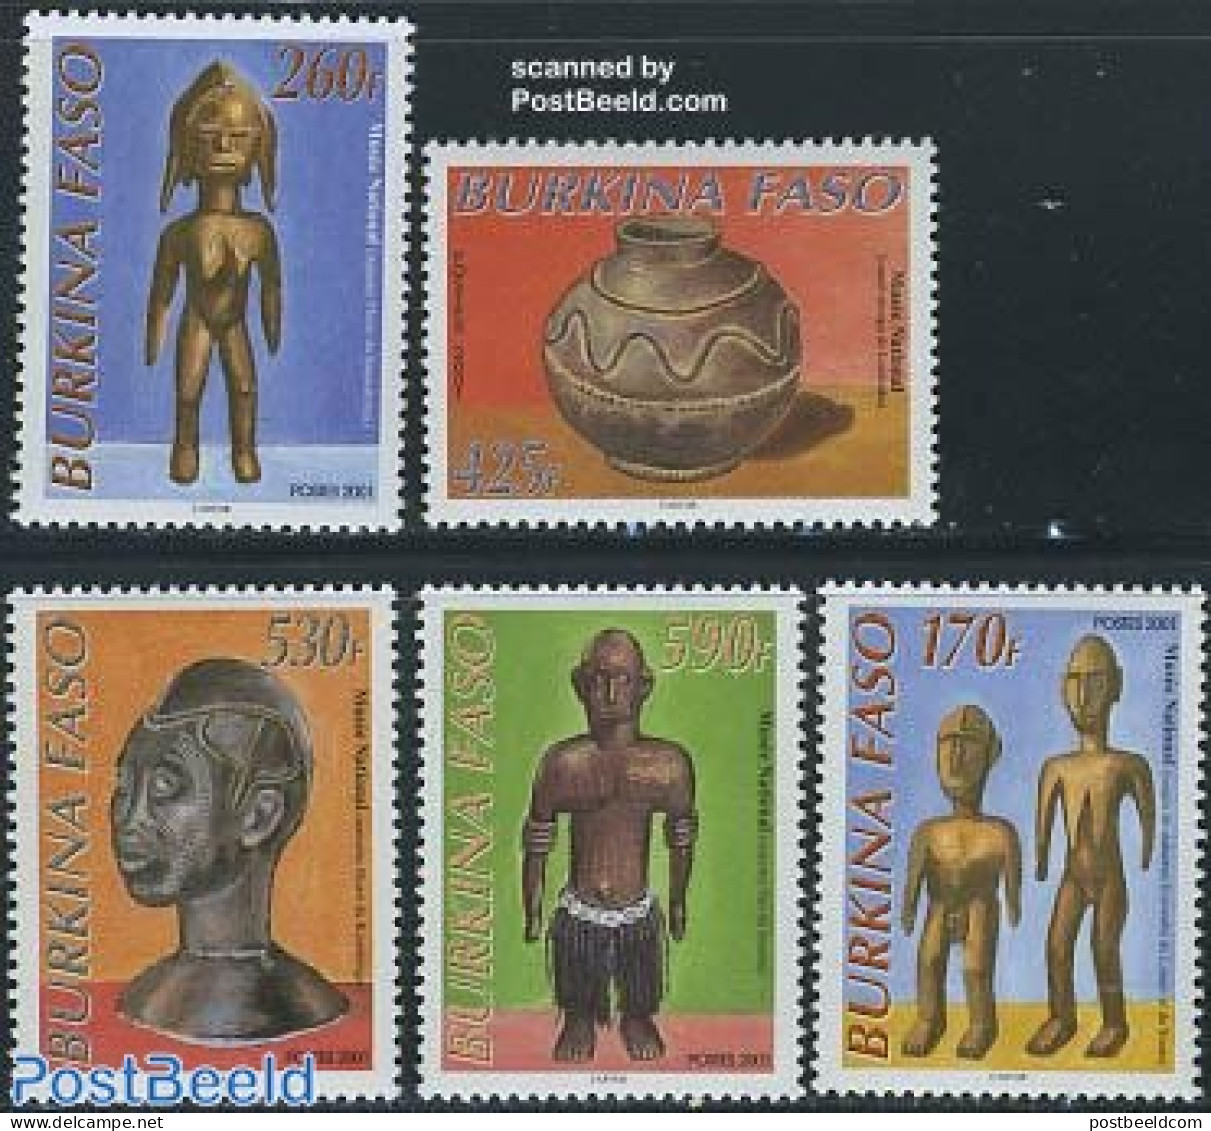 Burkina Faso 2001 National Museum 5v, Mint NH, Art - Museums - Sculpture - Musea